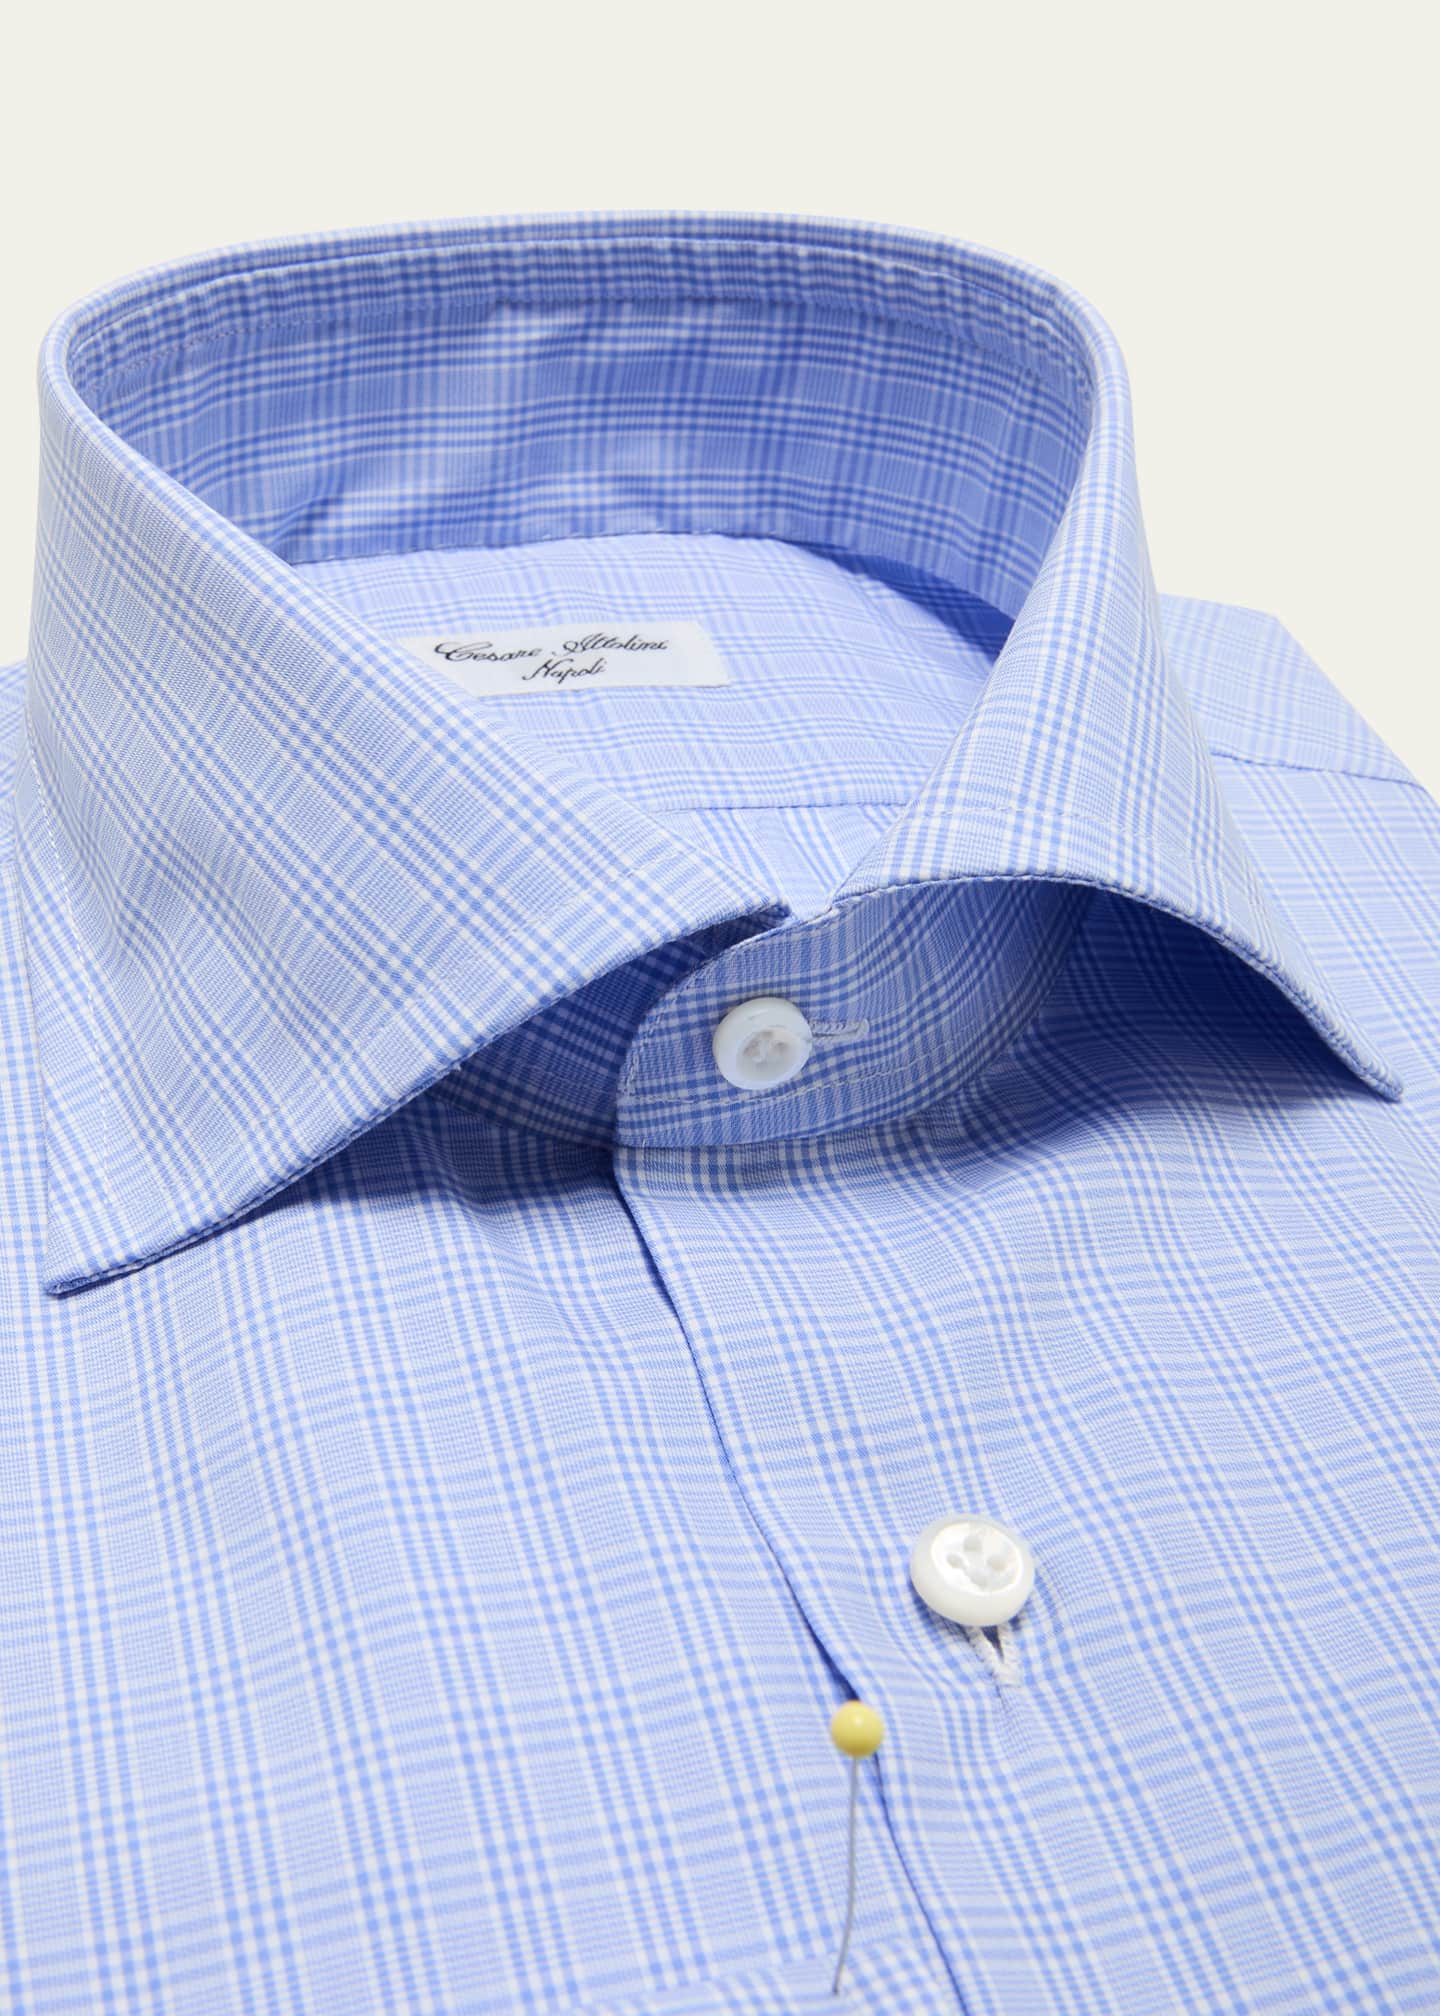 Cesare Attolini Men's Cotton Plaid Dress Shirt - Bergdorf Goodman